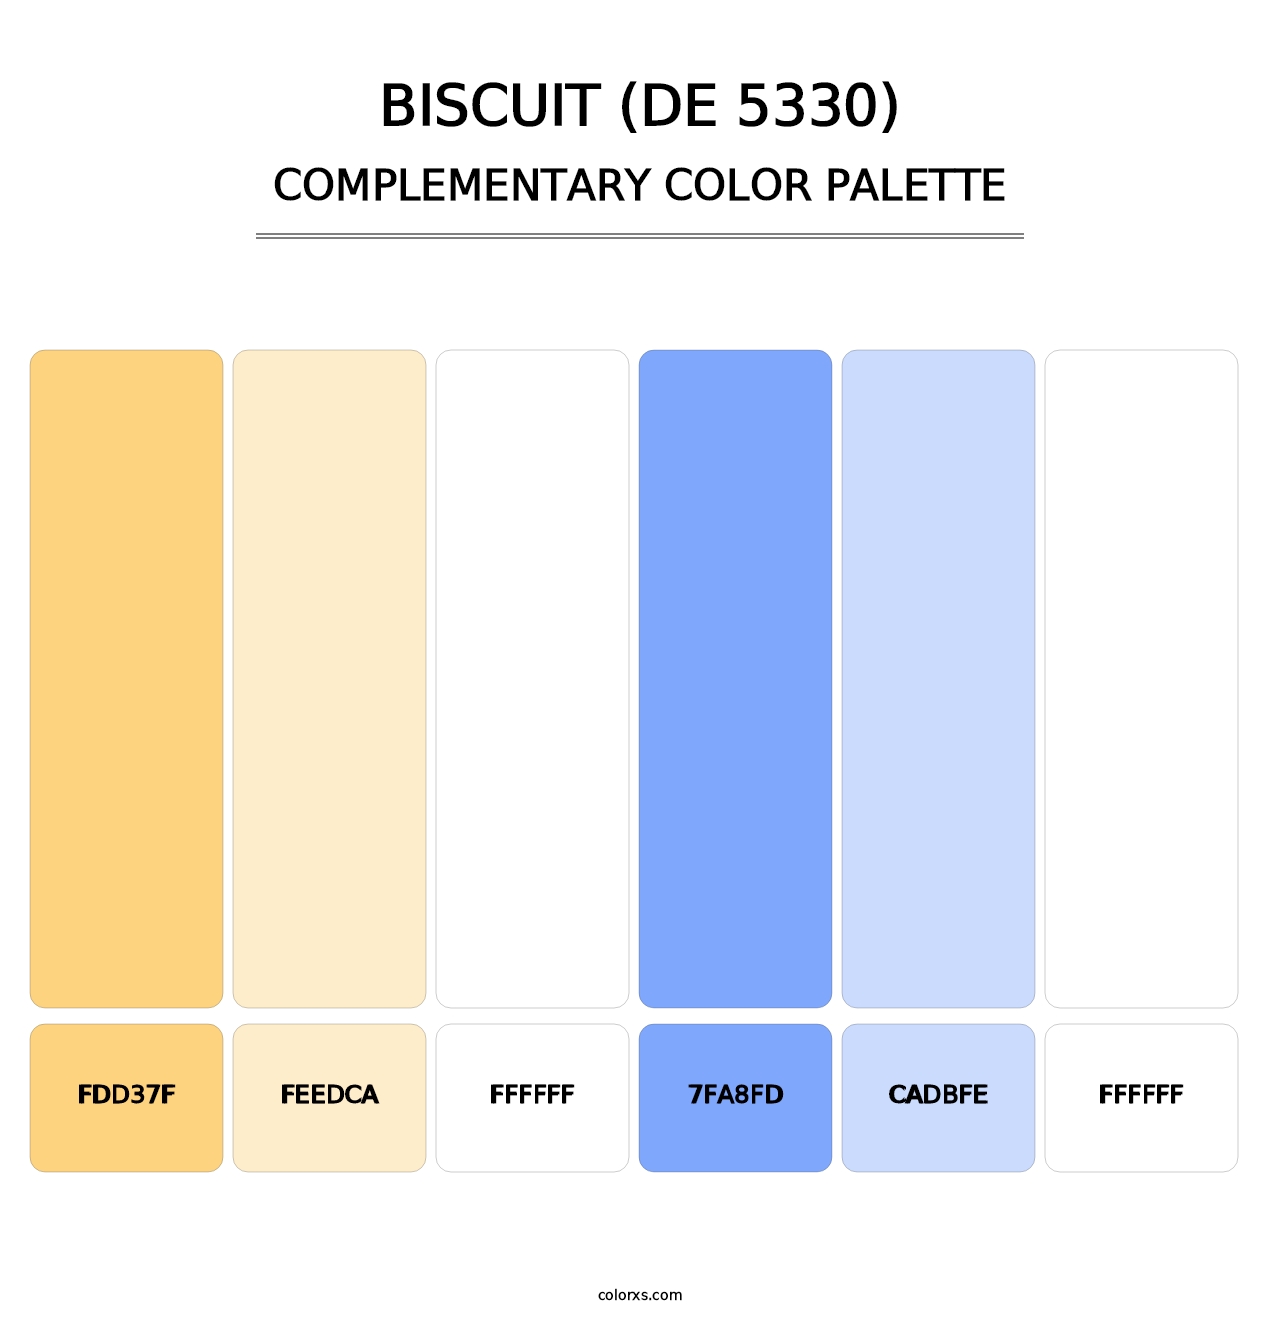 Biscuit (DE 5330) - Complementary Color Palette